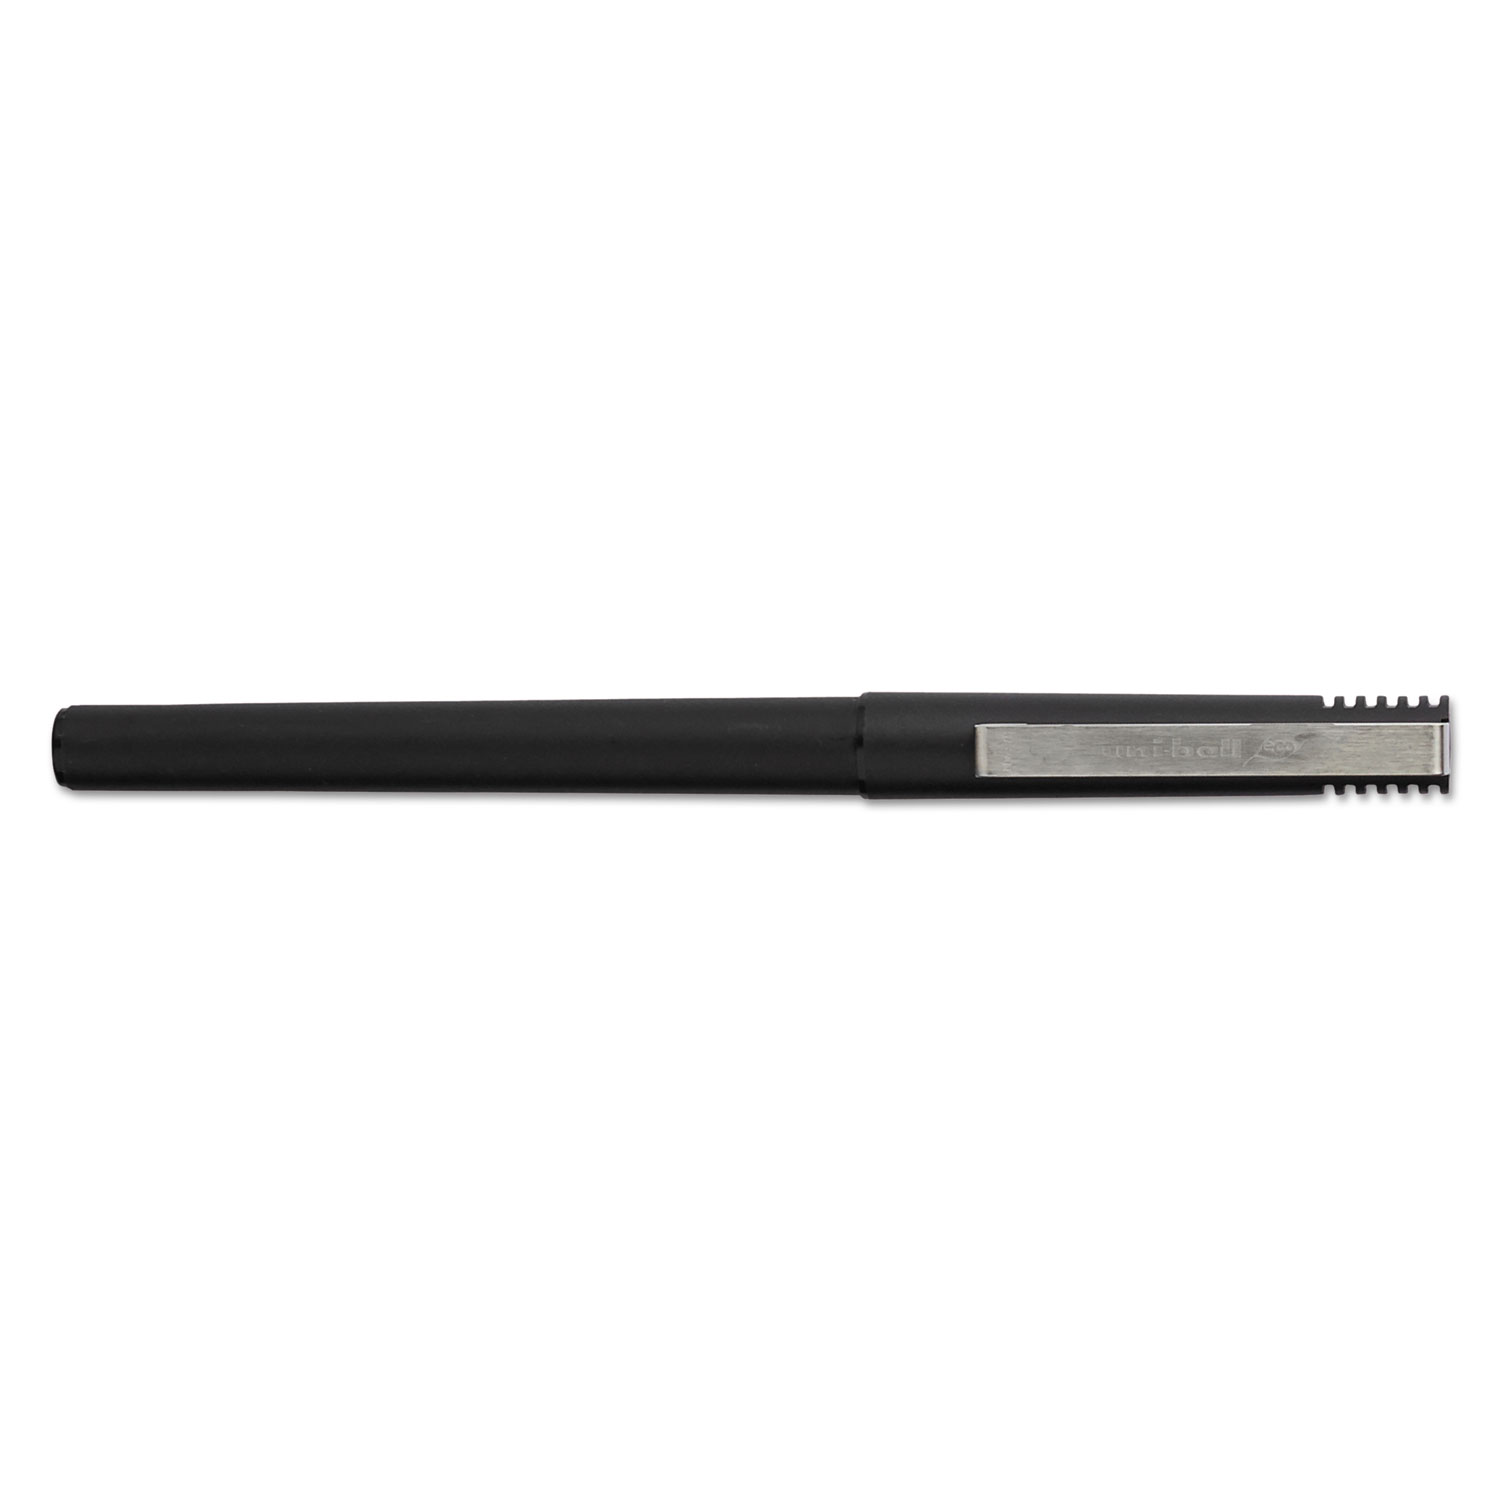 Stick Roller Ball Pen, Micro 0.5mm, Black Ink/Barrel, 72/Pack